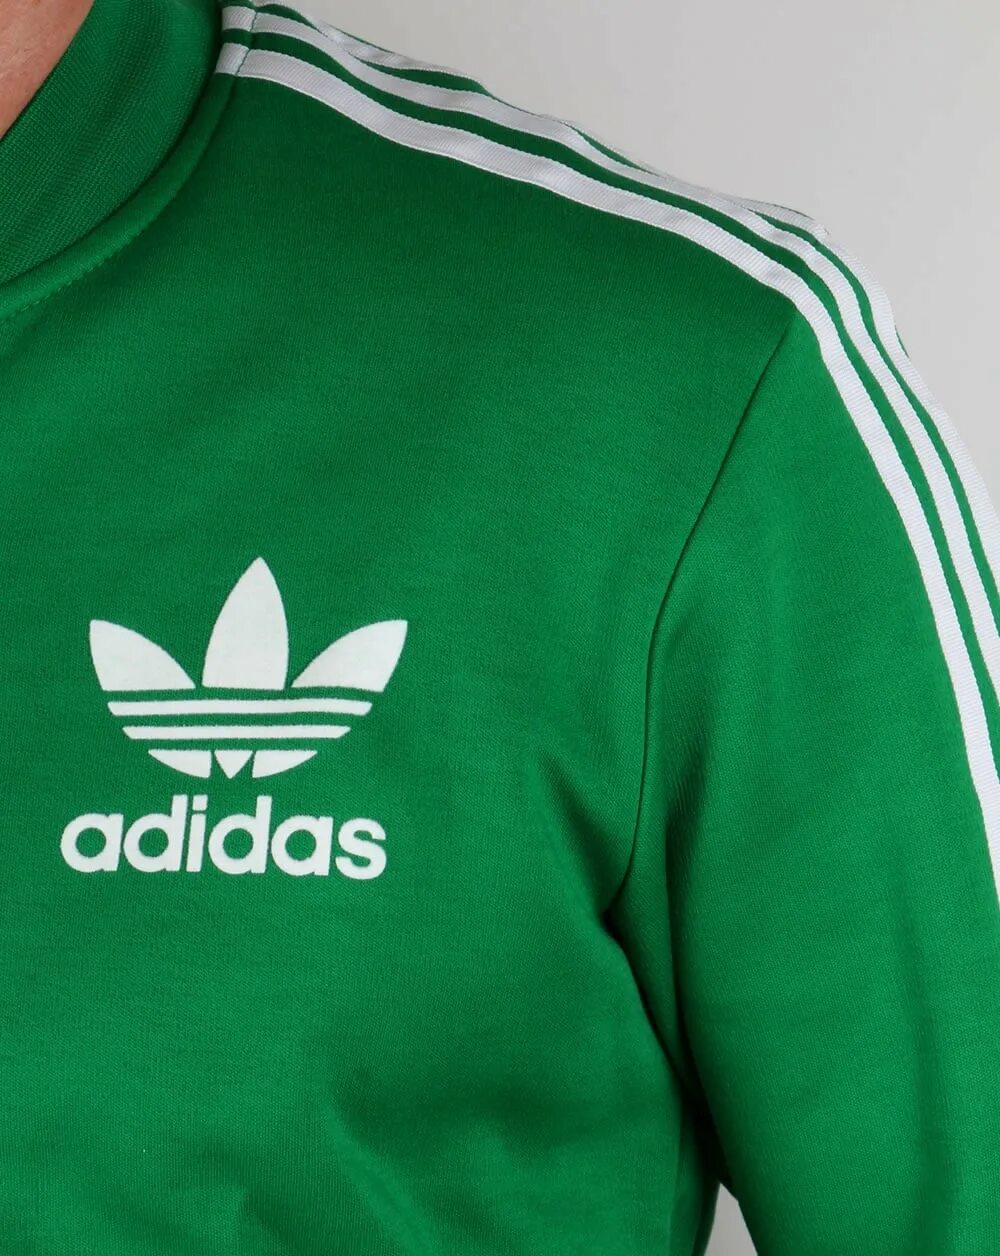 Adidas Originals Green Tracksuit. Adidas Originals track Top. Адидас Классик Грин. Кофта adidas Originals Superstar. Адидас и ти